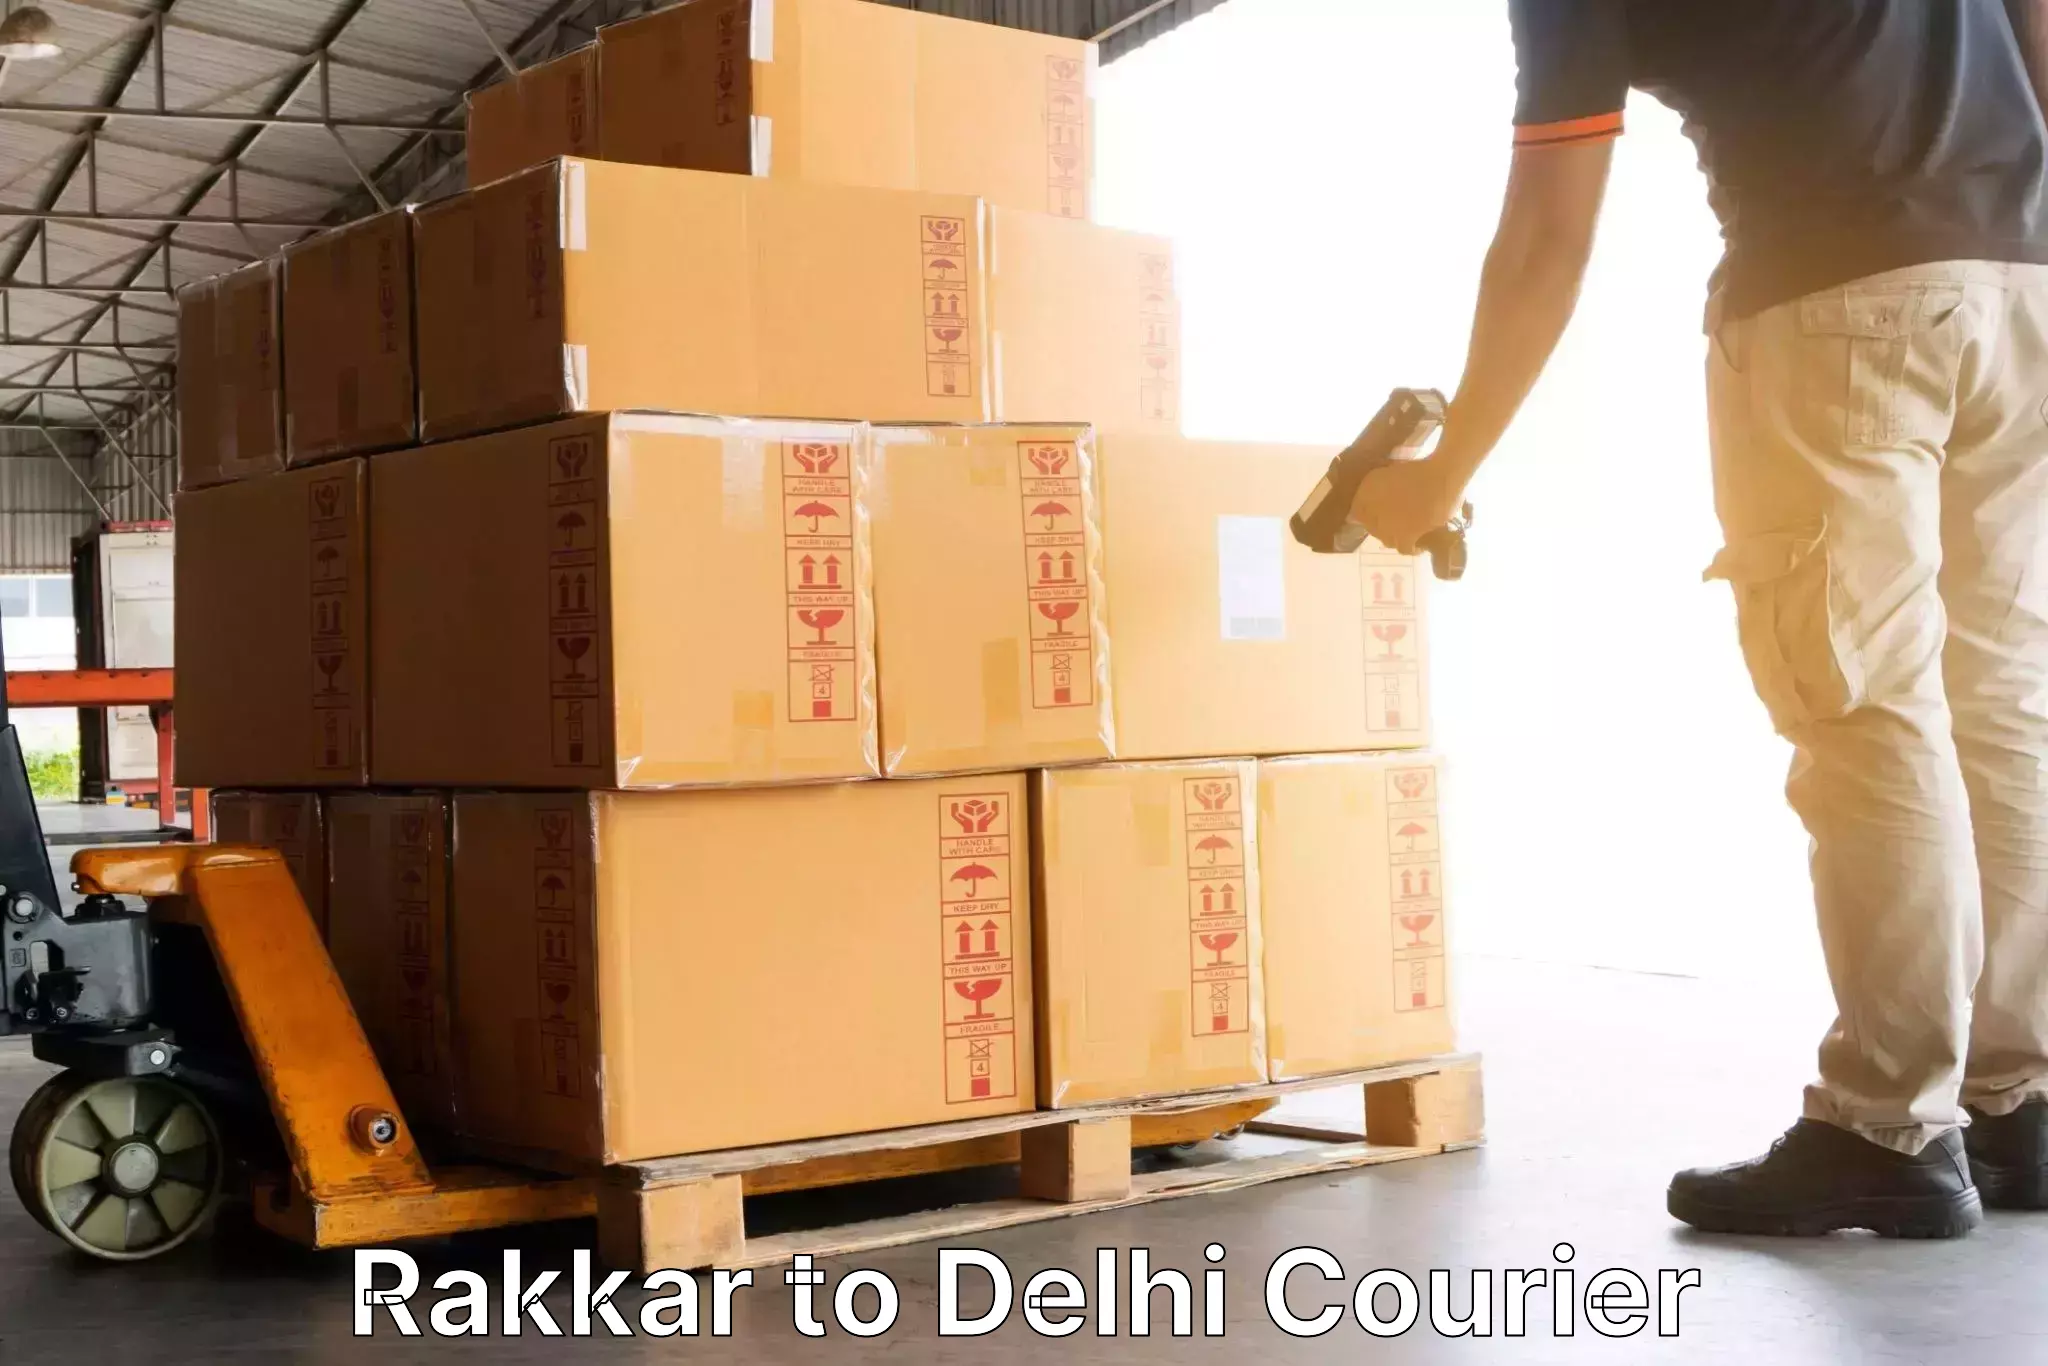 Courier service comparison in Rakkar to Kalkaji